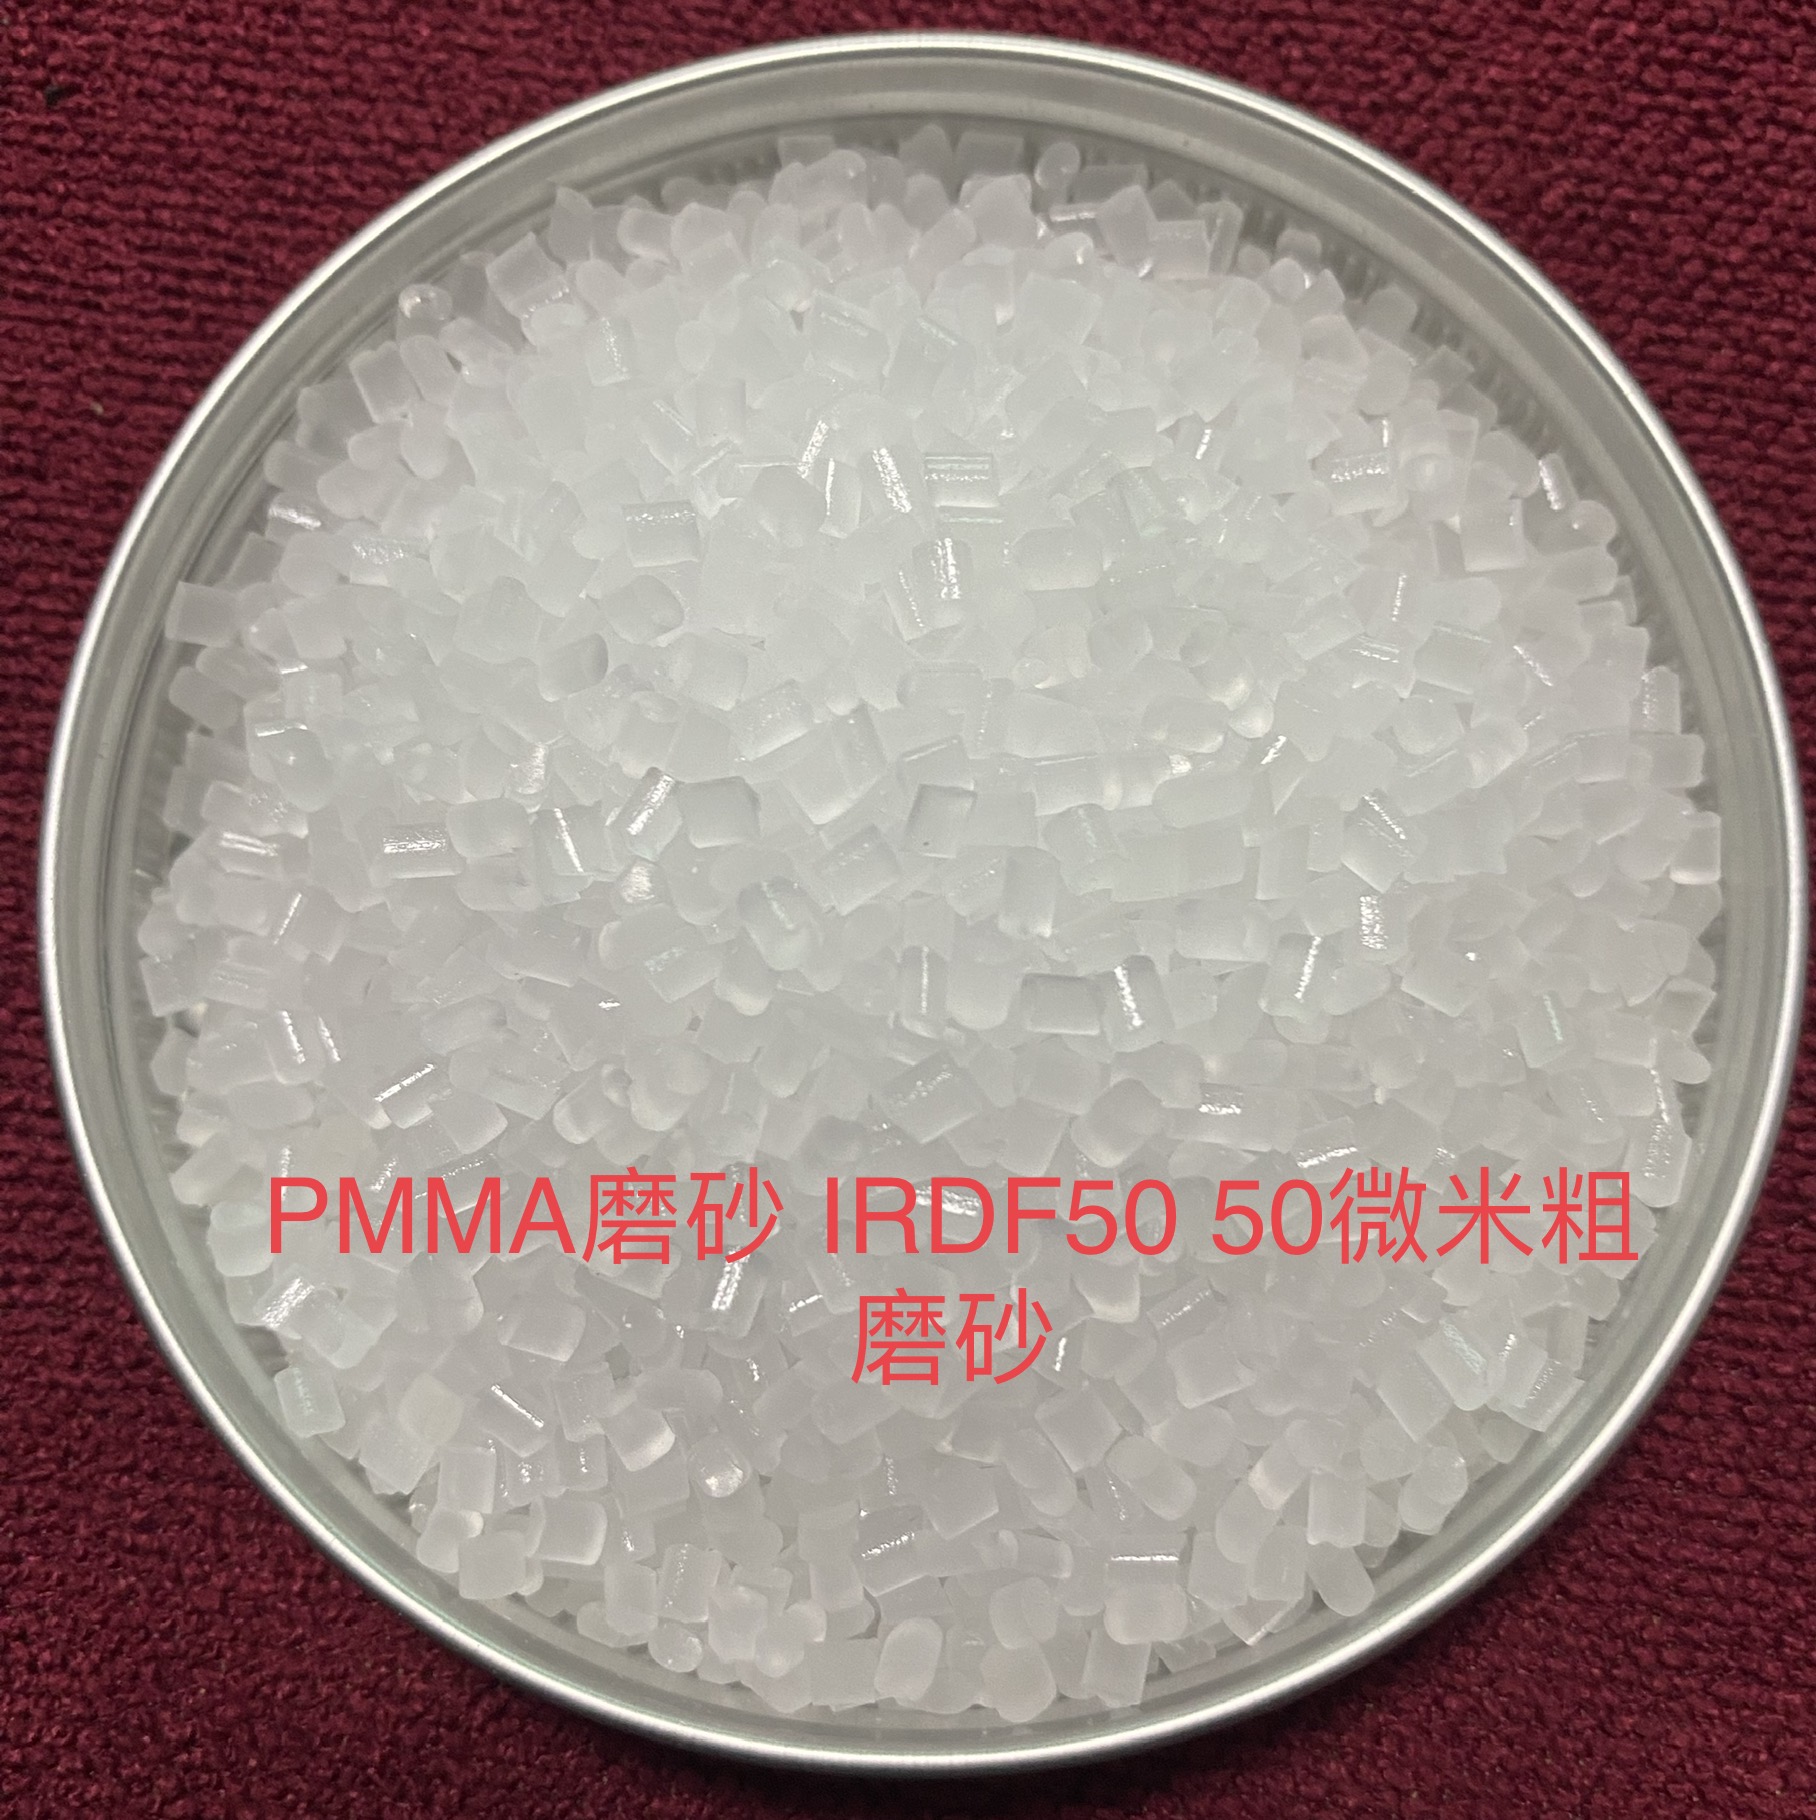 PMMA磨砂IRDF50 50微米粗 磨砂